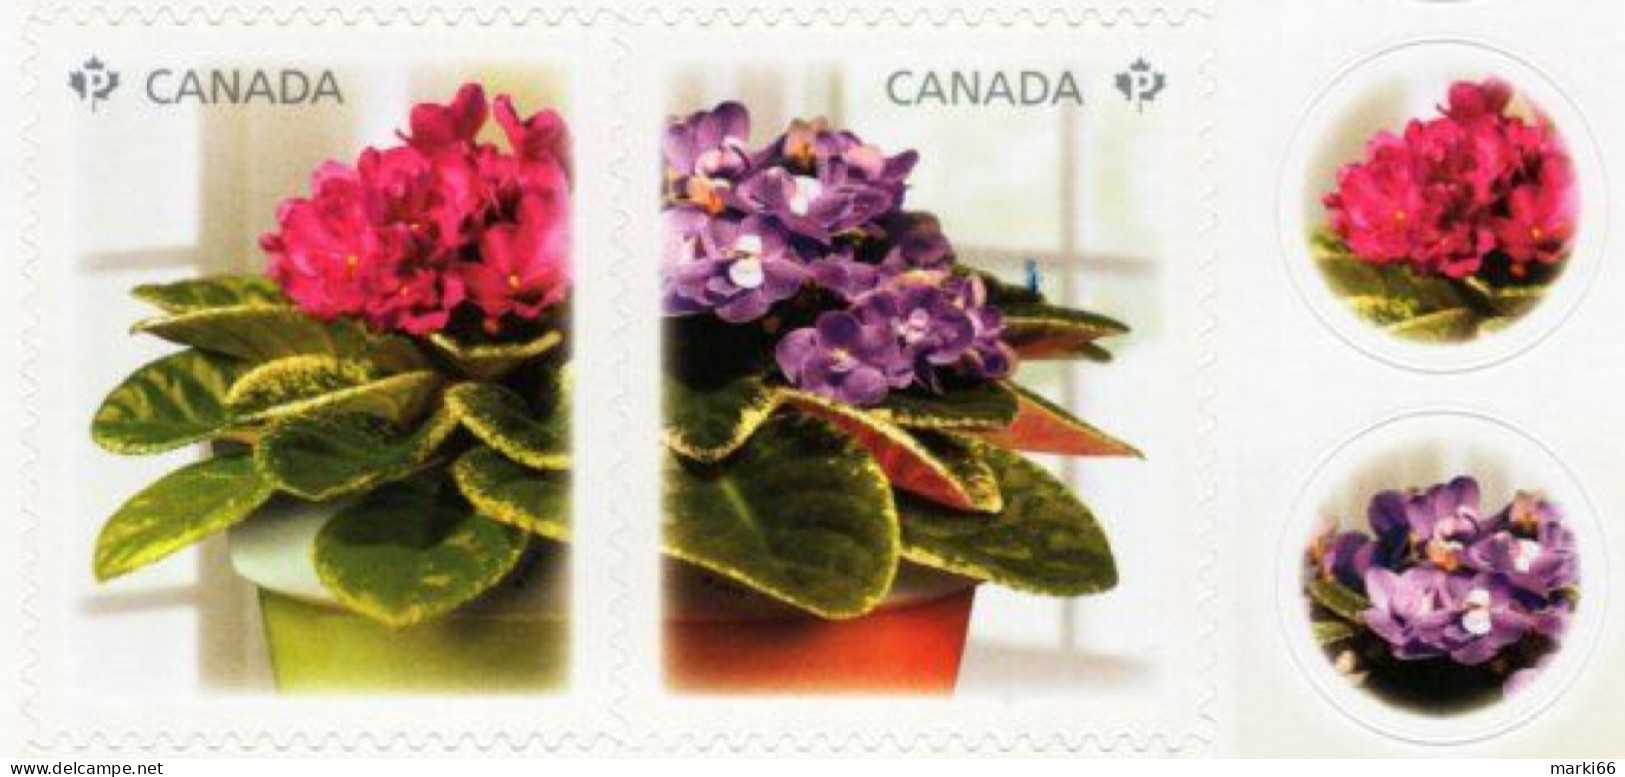 Canada - 2010 - African Violets - Saintpaulias - Mint Self-adhesive Booklet Stamp Set - Unused Stamps